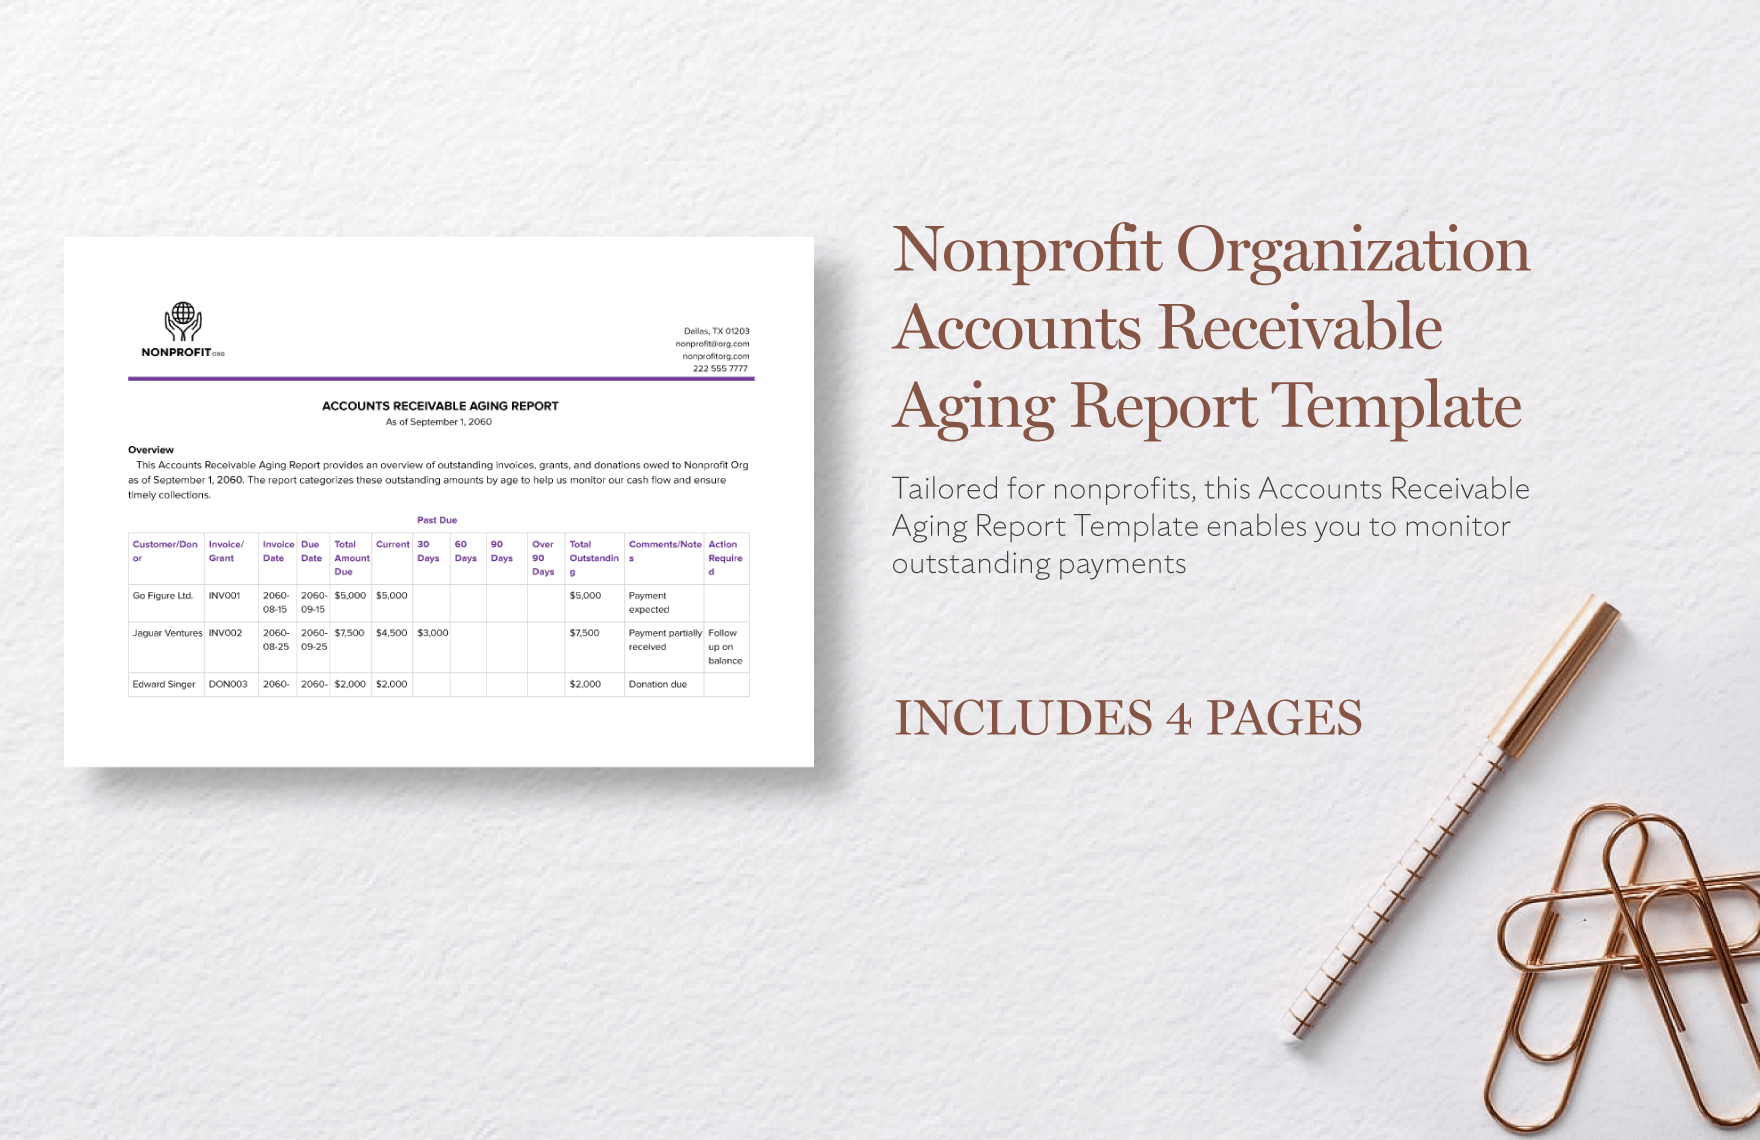 Nonprofit Organization Accounts Receivable Aging Report Template in Word, Google Docs, PDF